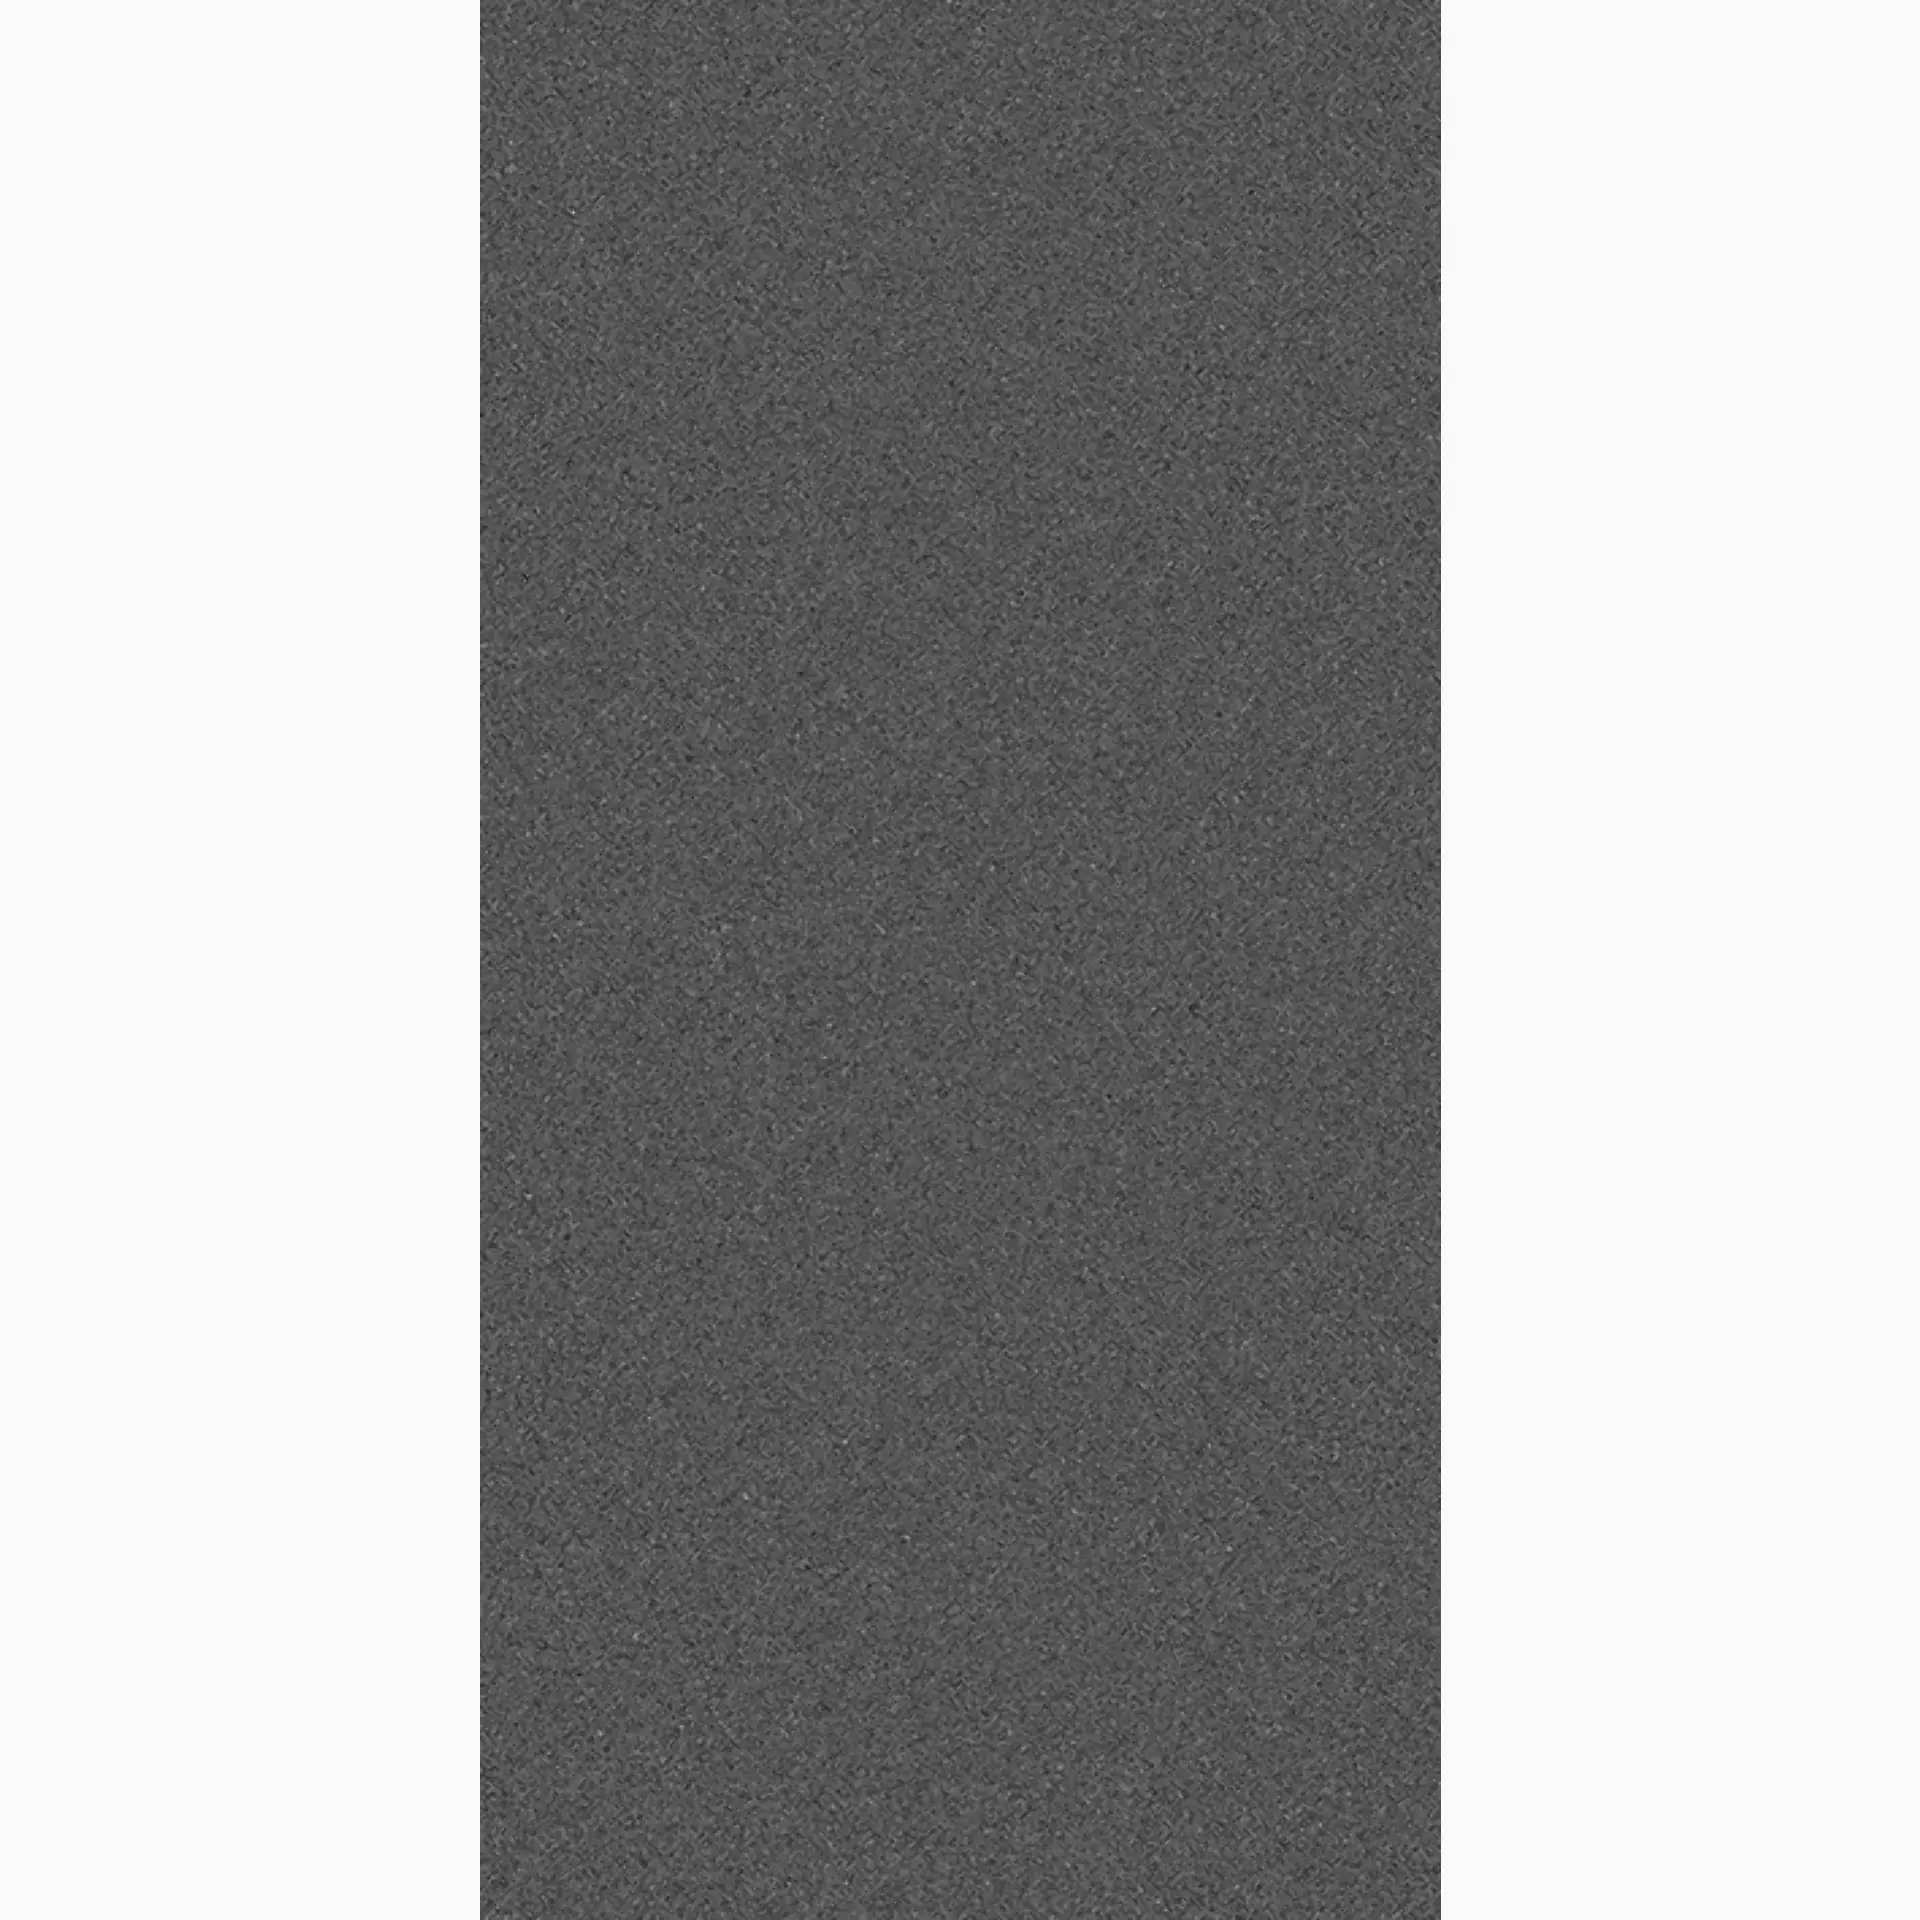 Villeroy & Boch Pure Line 2.0 Asphalt Grey Matt 2754-UL90 30x60cm rectified 12mm